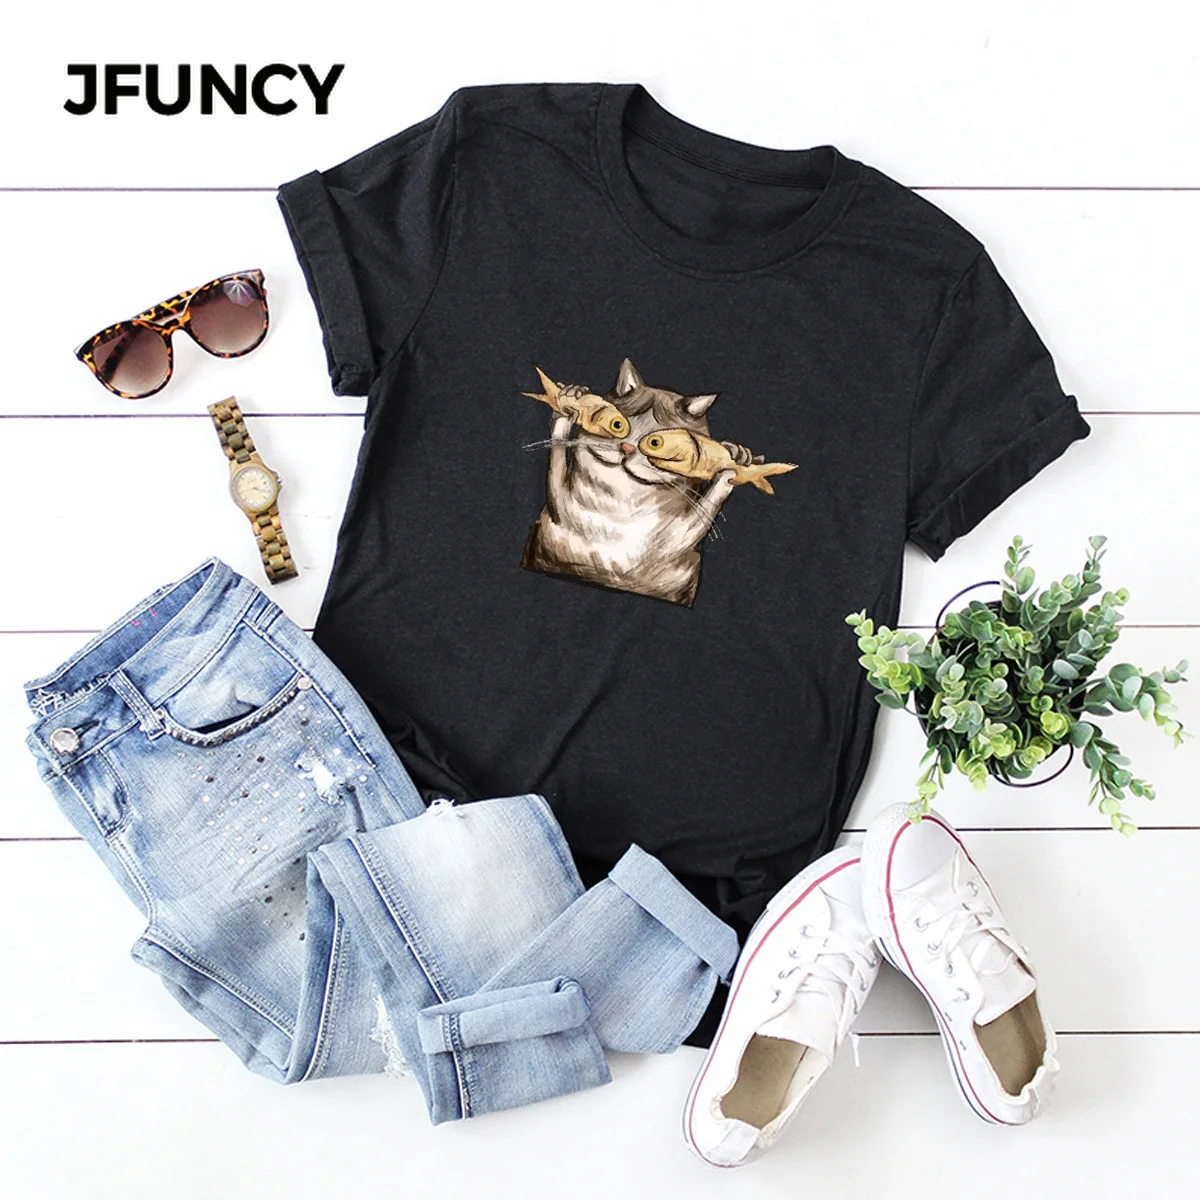 

JFUNCY Funny Cats Graphic Tees Women Tops 100% Cotton Summer T-shirt Short Sleeve Woman Shirts Lady Casual Tshirt